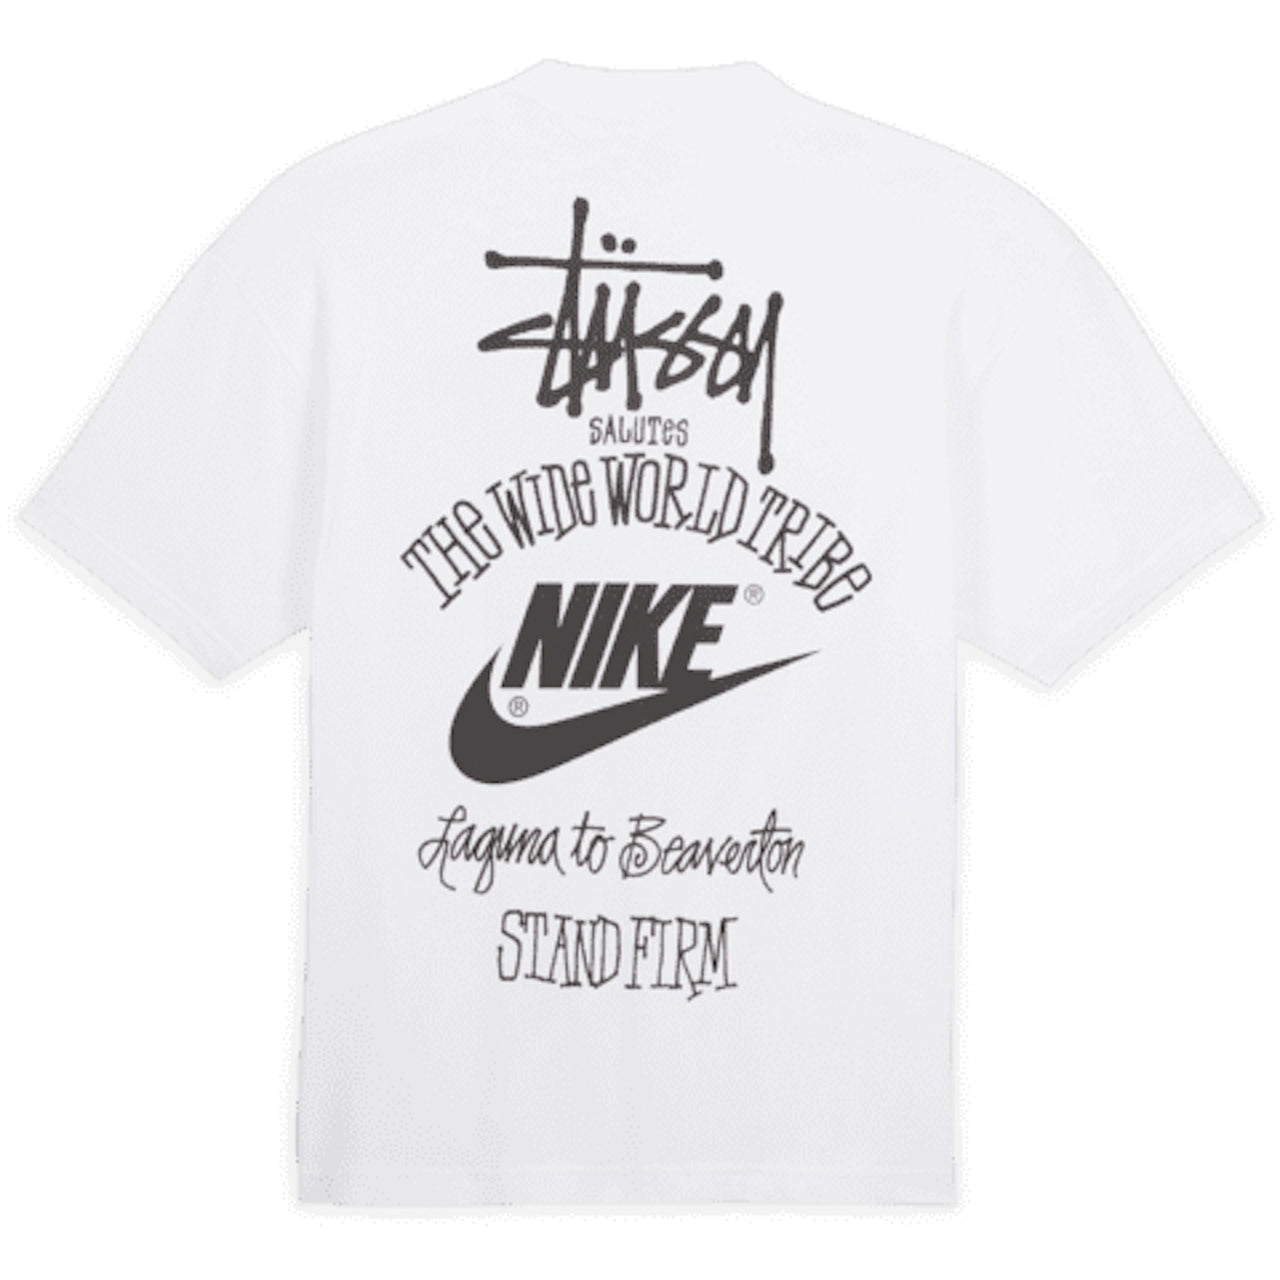 Nike/Stussy Men's T-Shirt "The World Tribe"